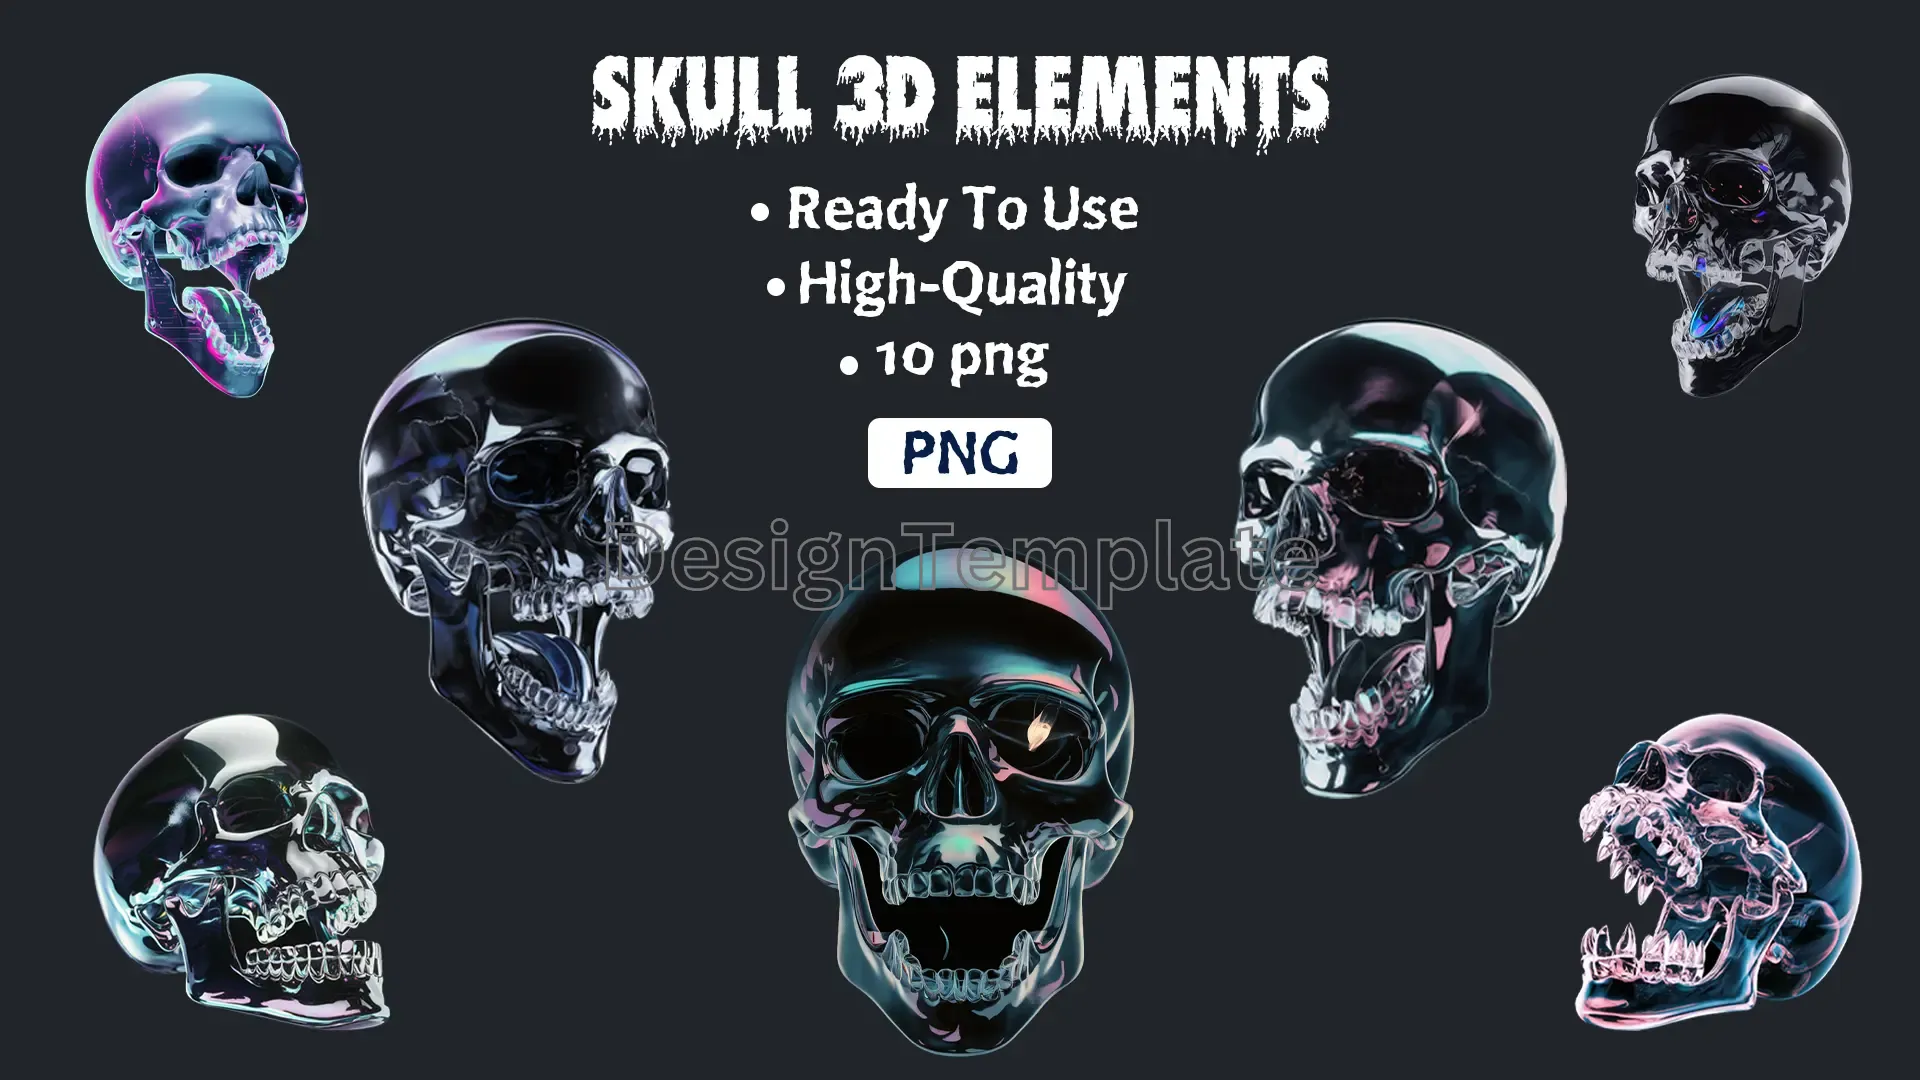 Metalic Golden 3D Skull Elements Pack